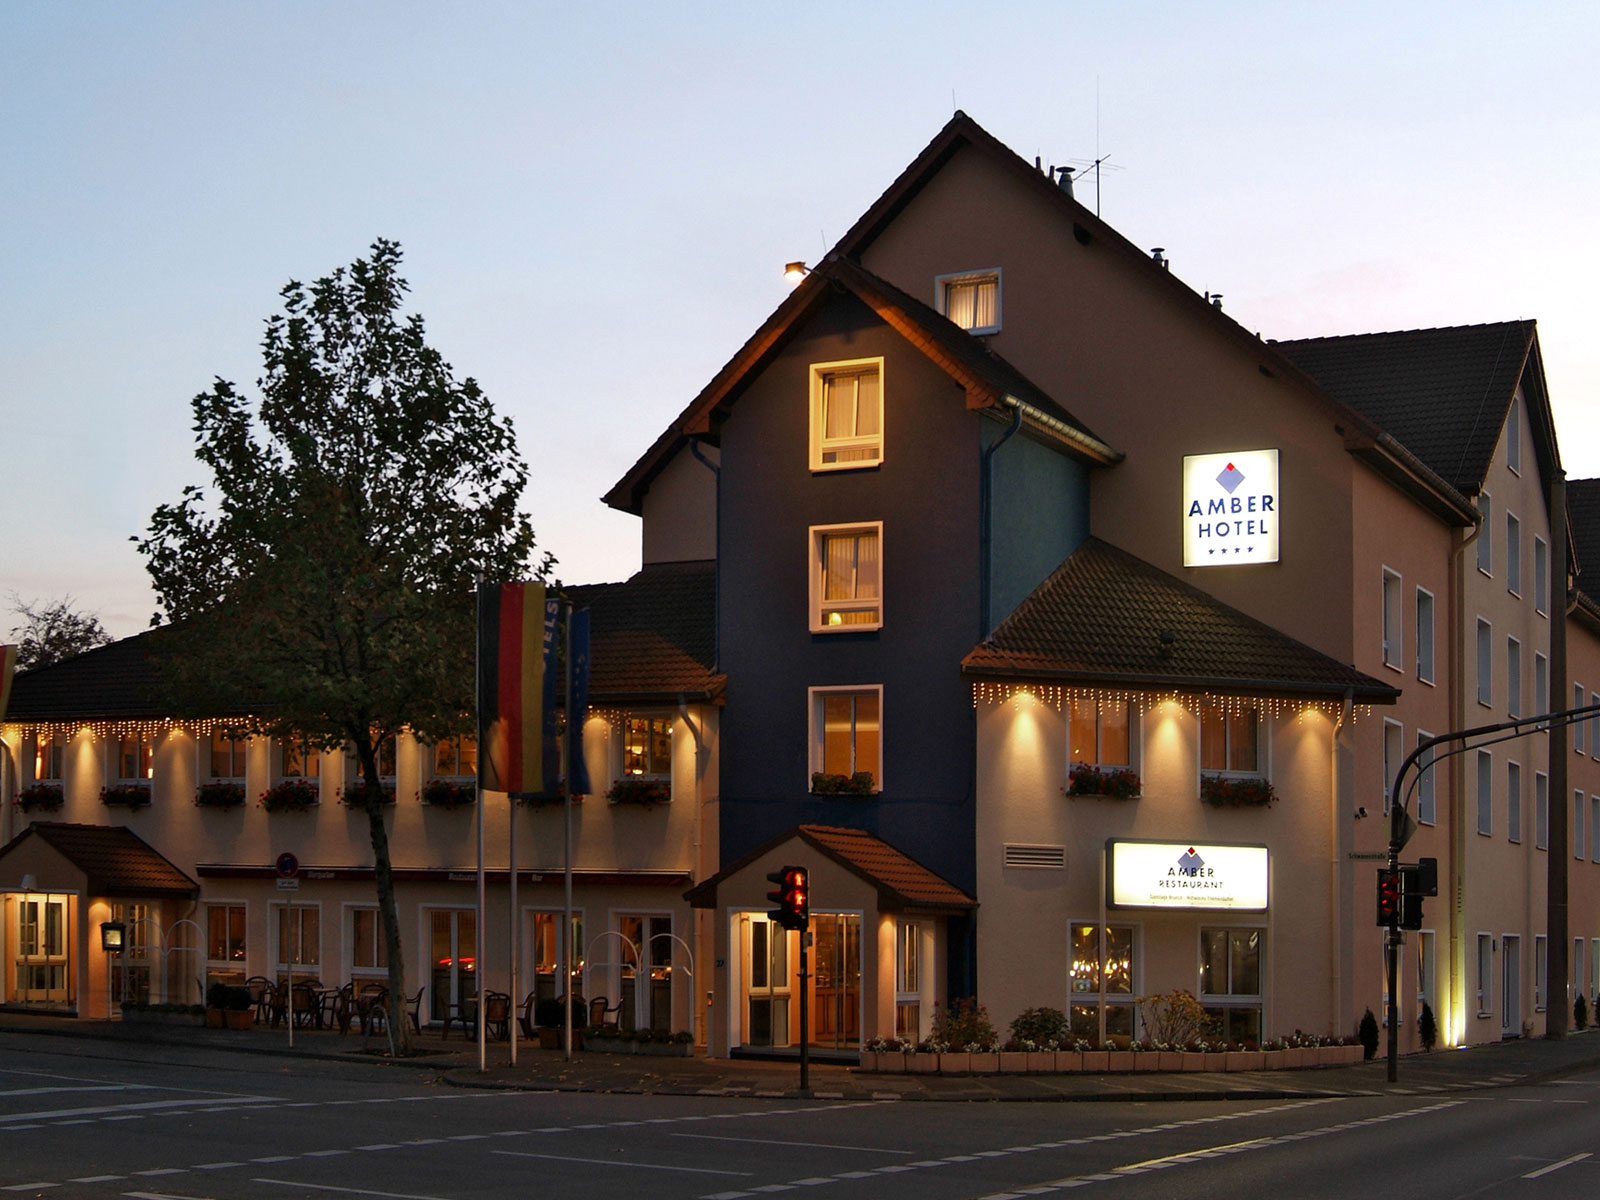 Amber Hotel Hilden/Düsseldorf <br/>84.00 ew <br/> <a href='http://vakantieoplossing.nl/outpage/?id=d11ac1e5ee37f5895edfe6ba60b1c345' target='_blank'>View Details</a>